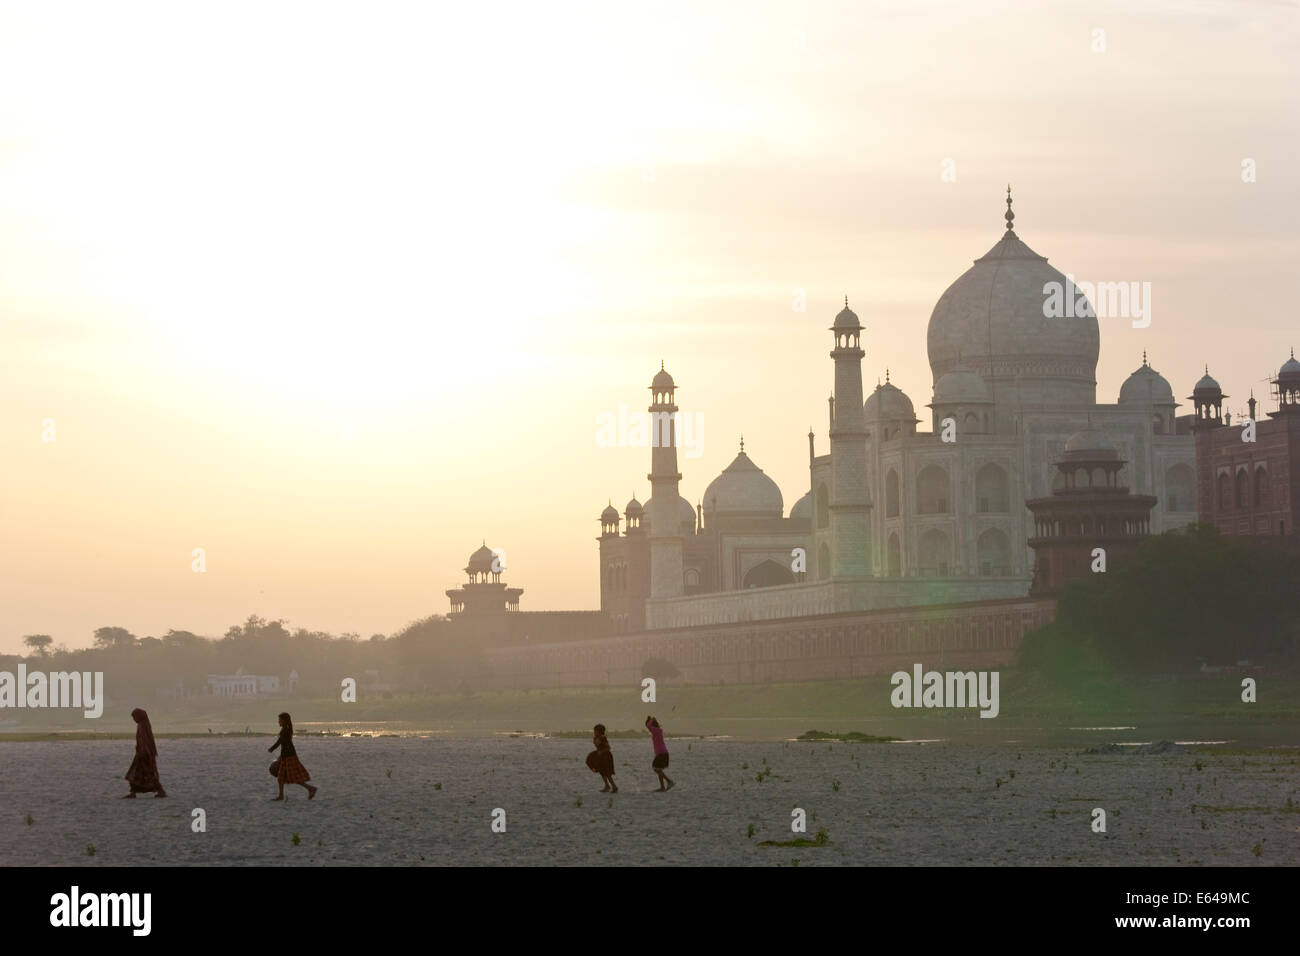 Taj Mahal on the banks of the River Yamuna, Agra, India Stock Photo